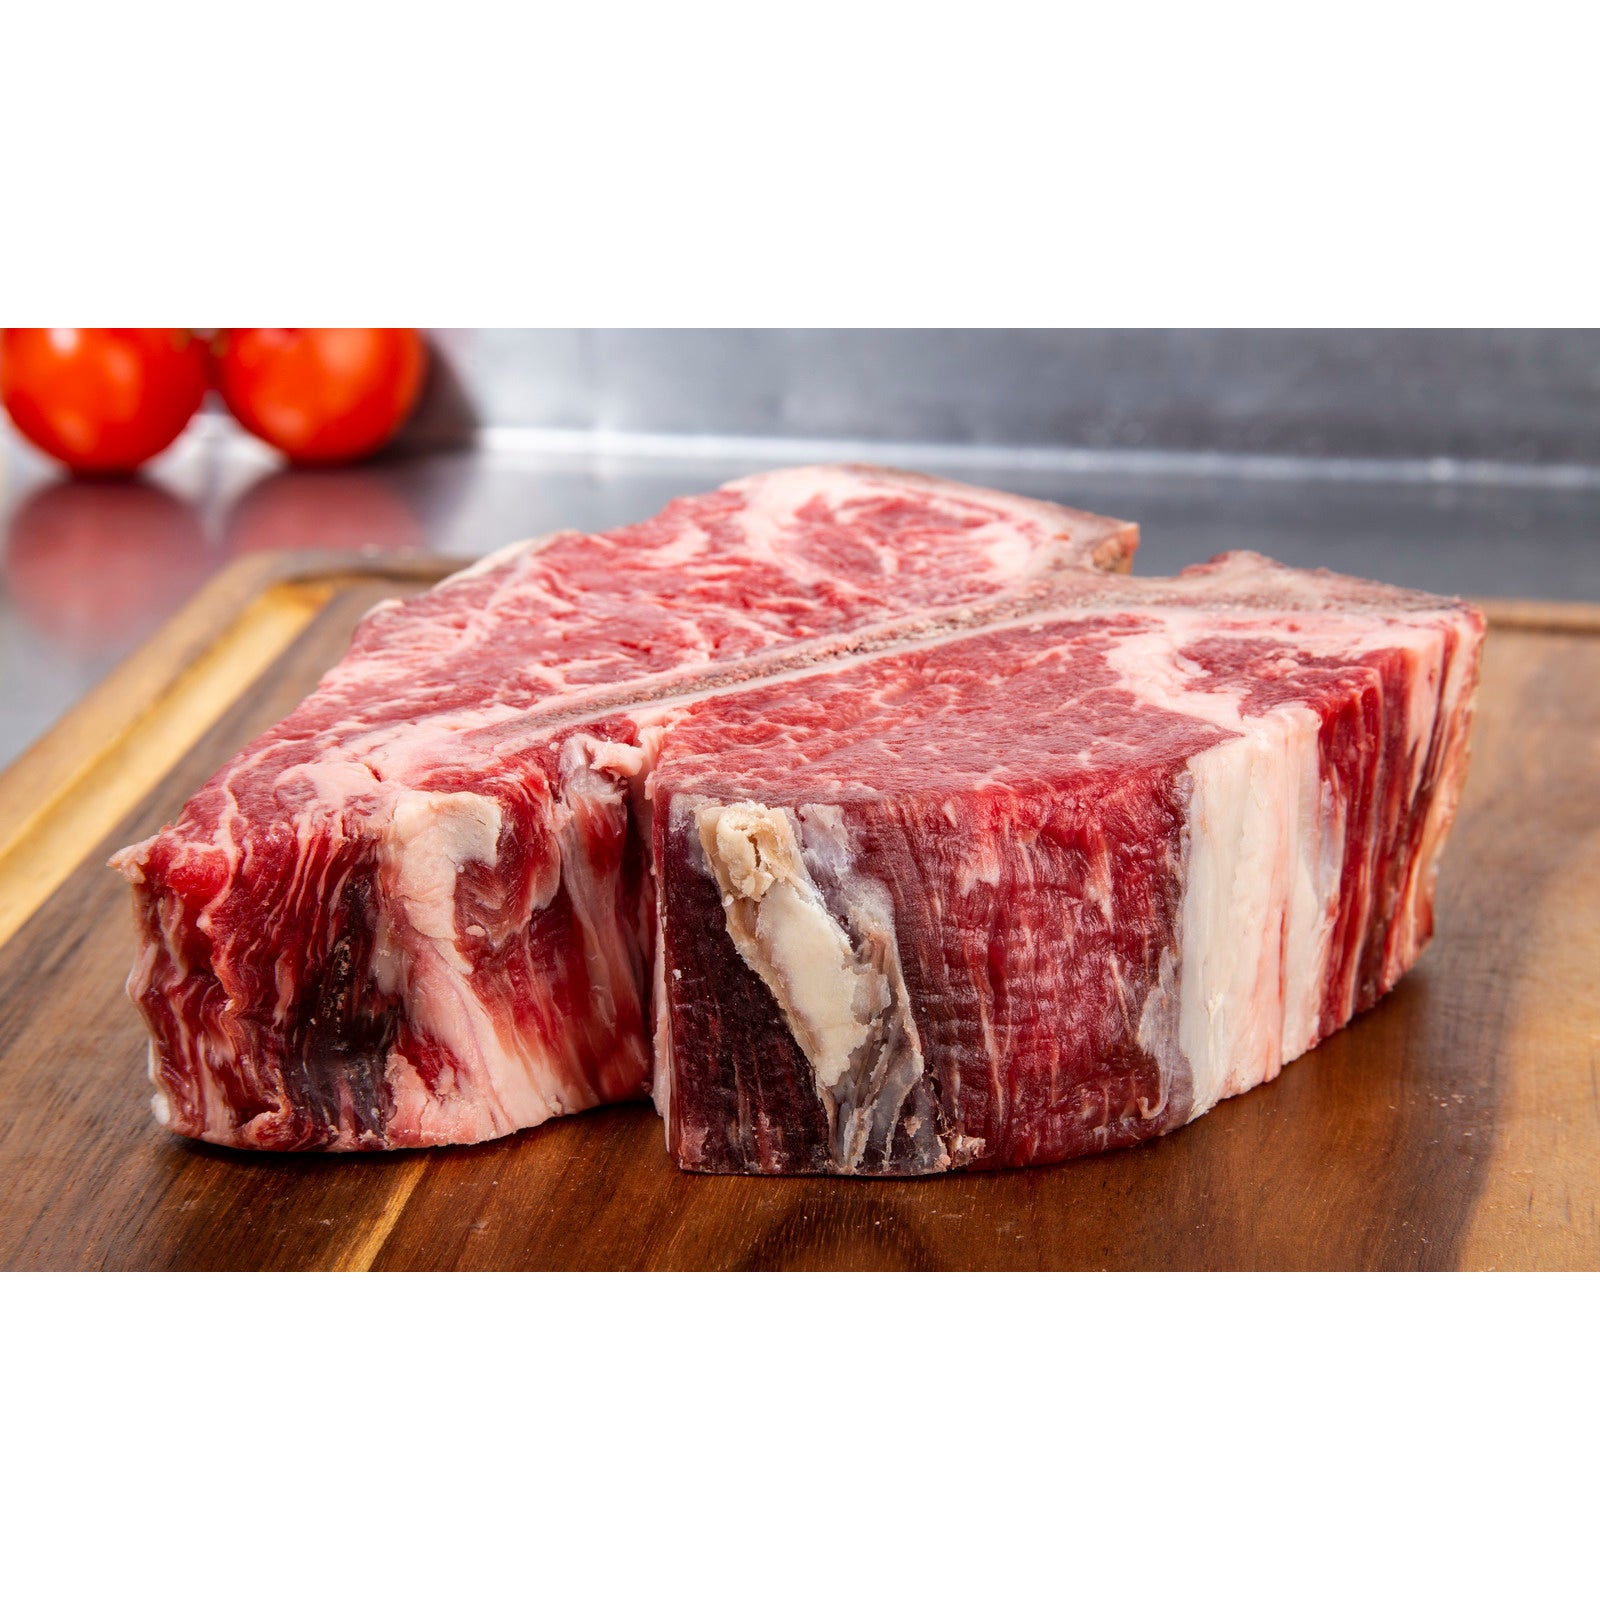 USDA Prime Dry Aged Beef Porterhouse Steak